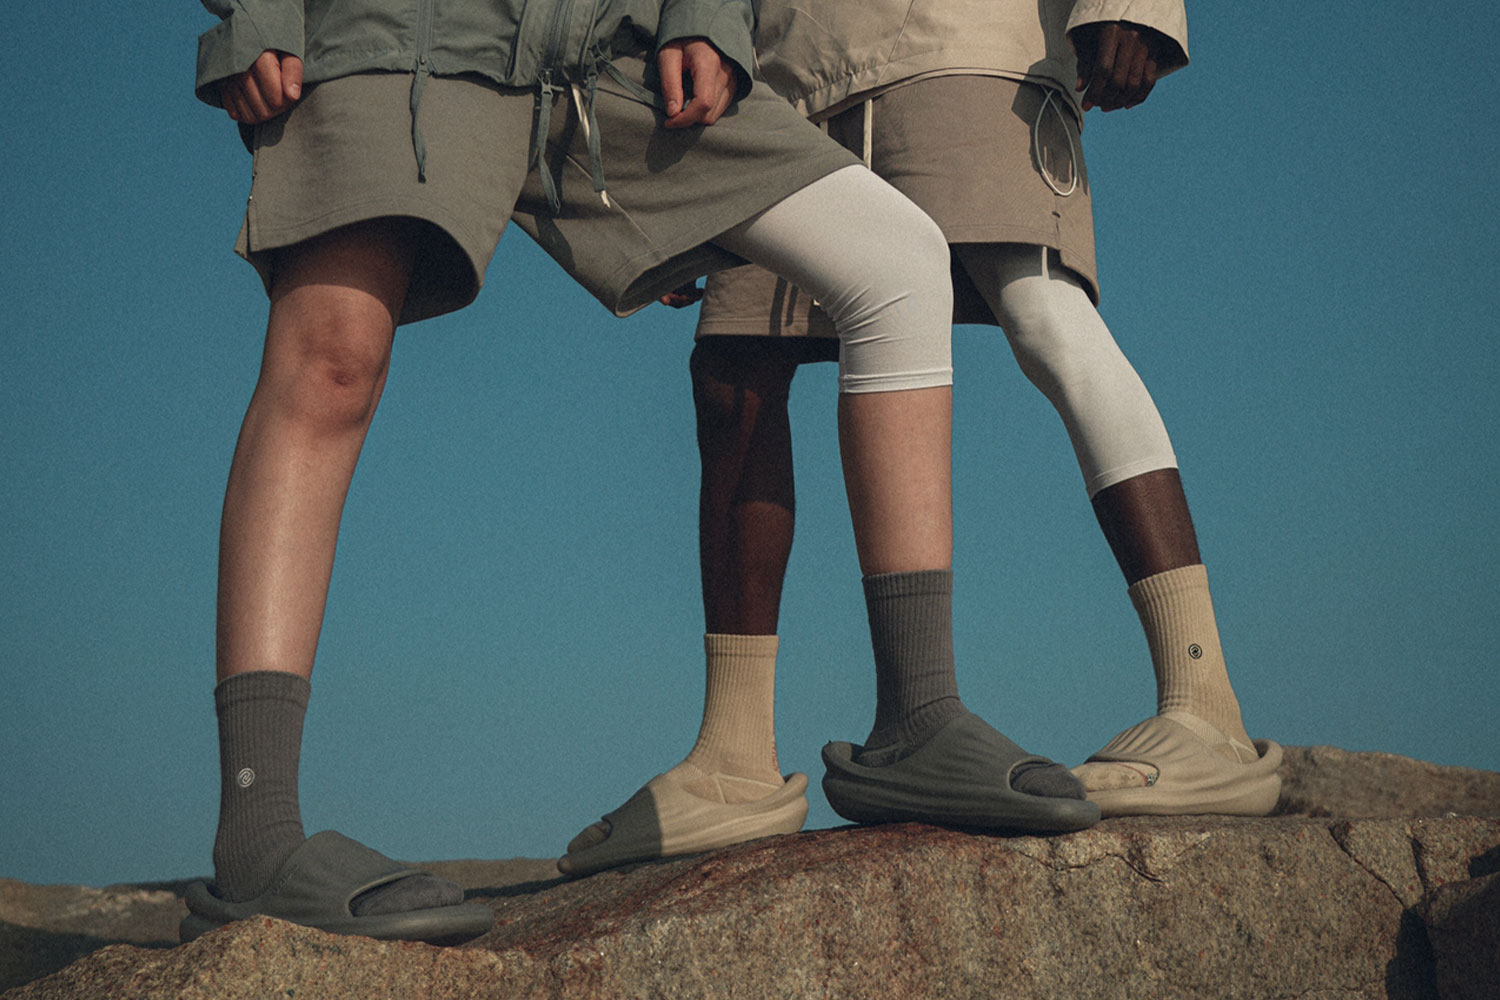 UZIS,The Step,GLACIER,DESERT,L  极致轻质软弹！UZIS 全新 “THE STEP” 运动拖鞋即将发售！